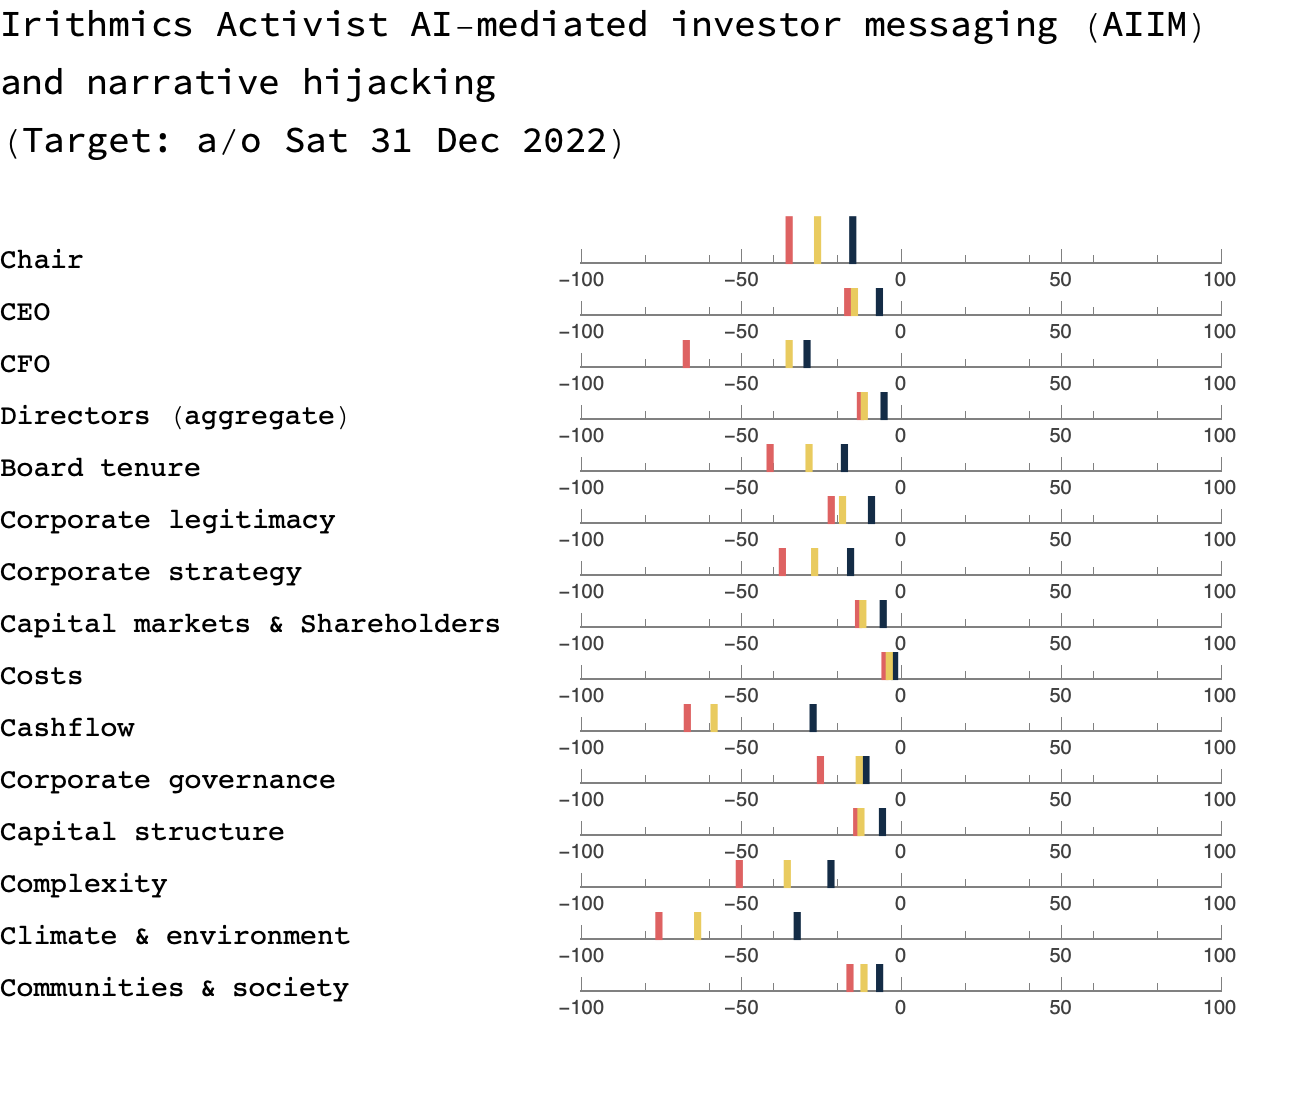 AI-mediated investor messaging (AIIM) example 31 Dec 2022